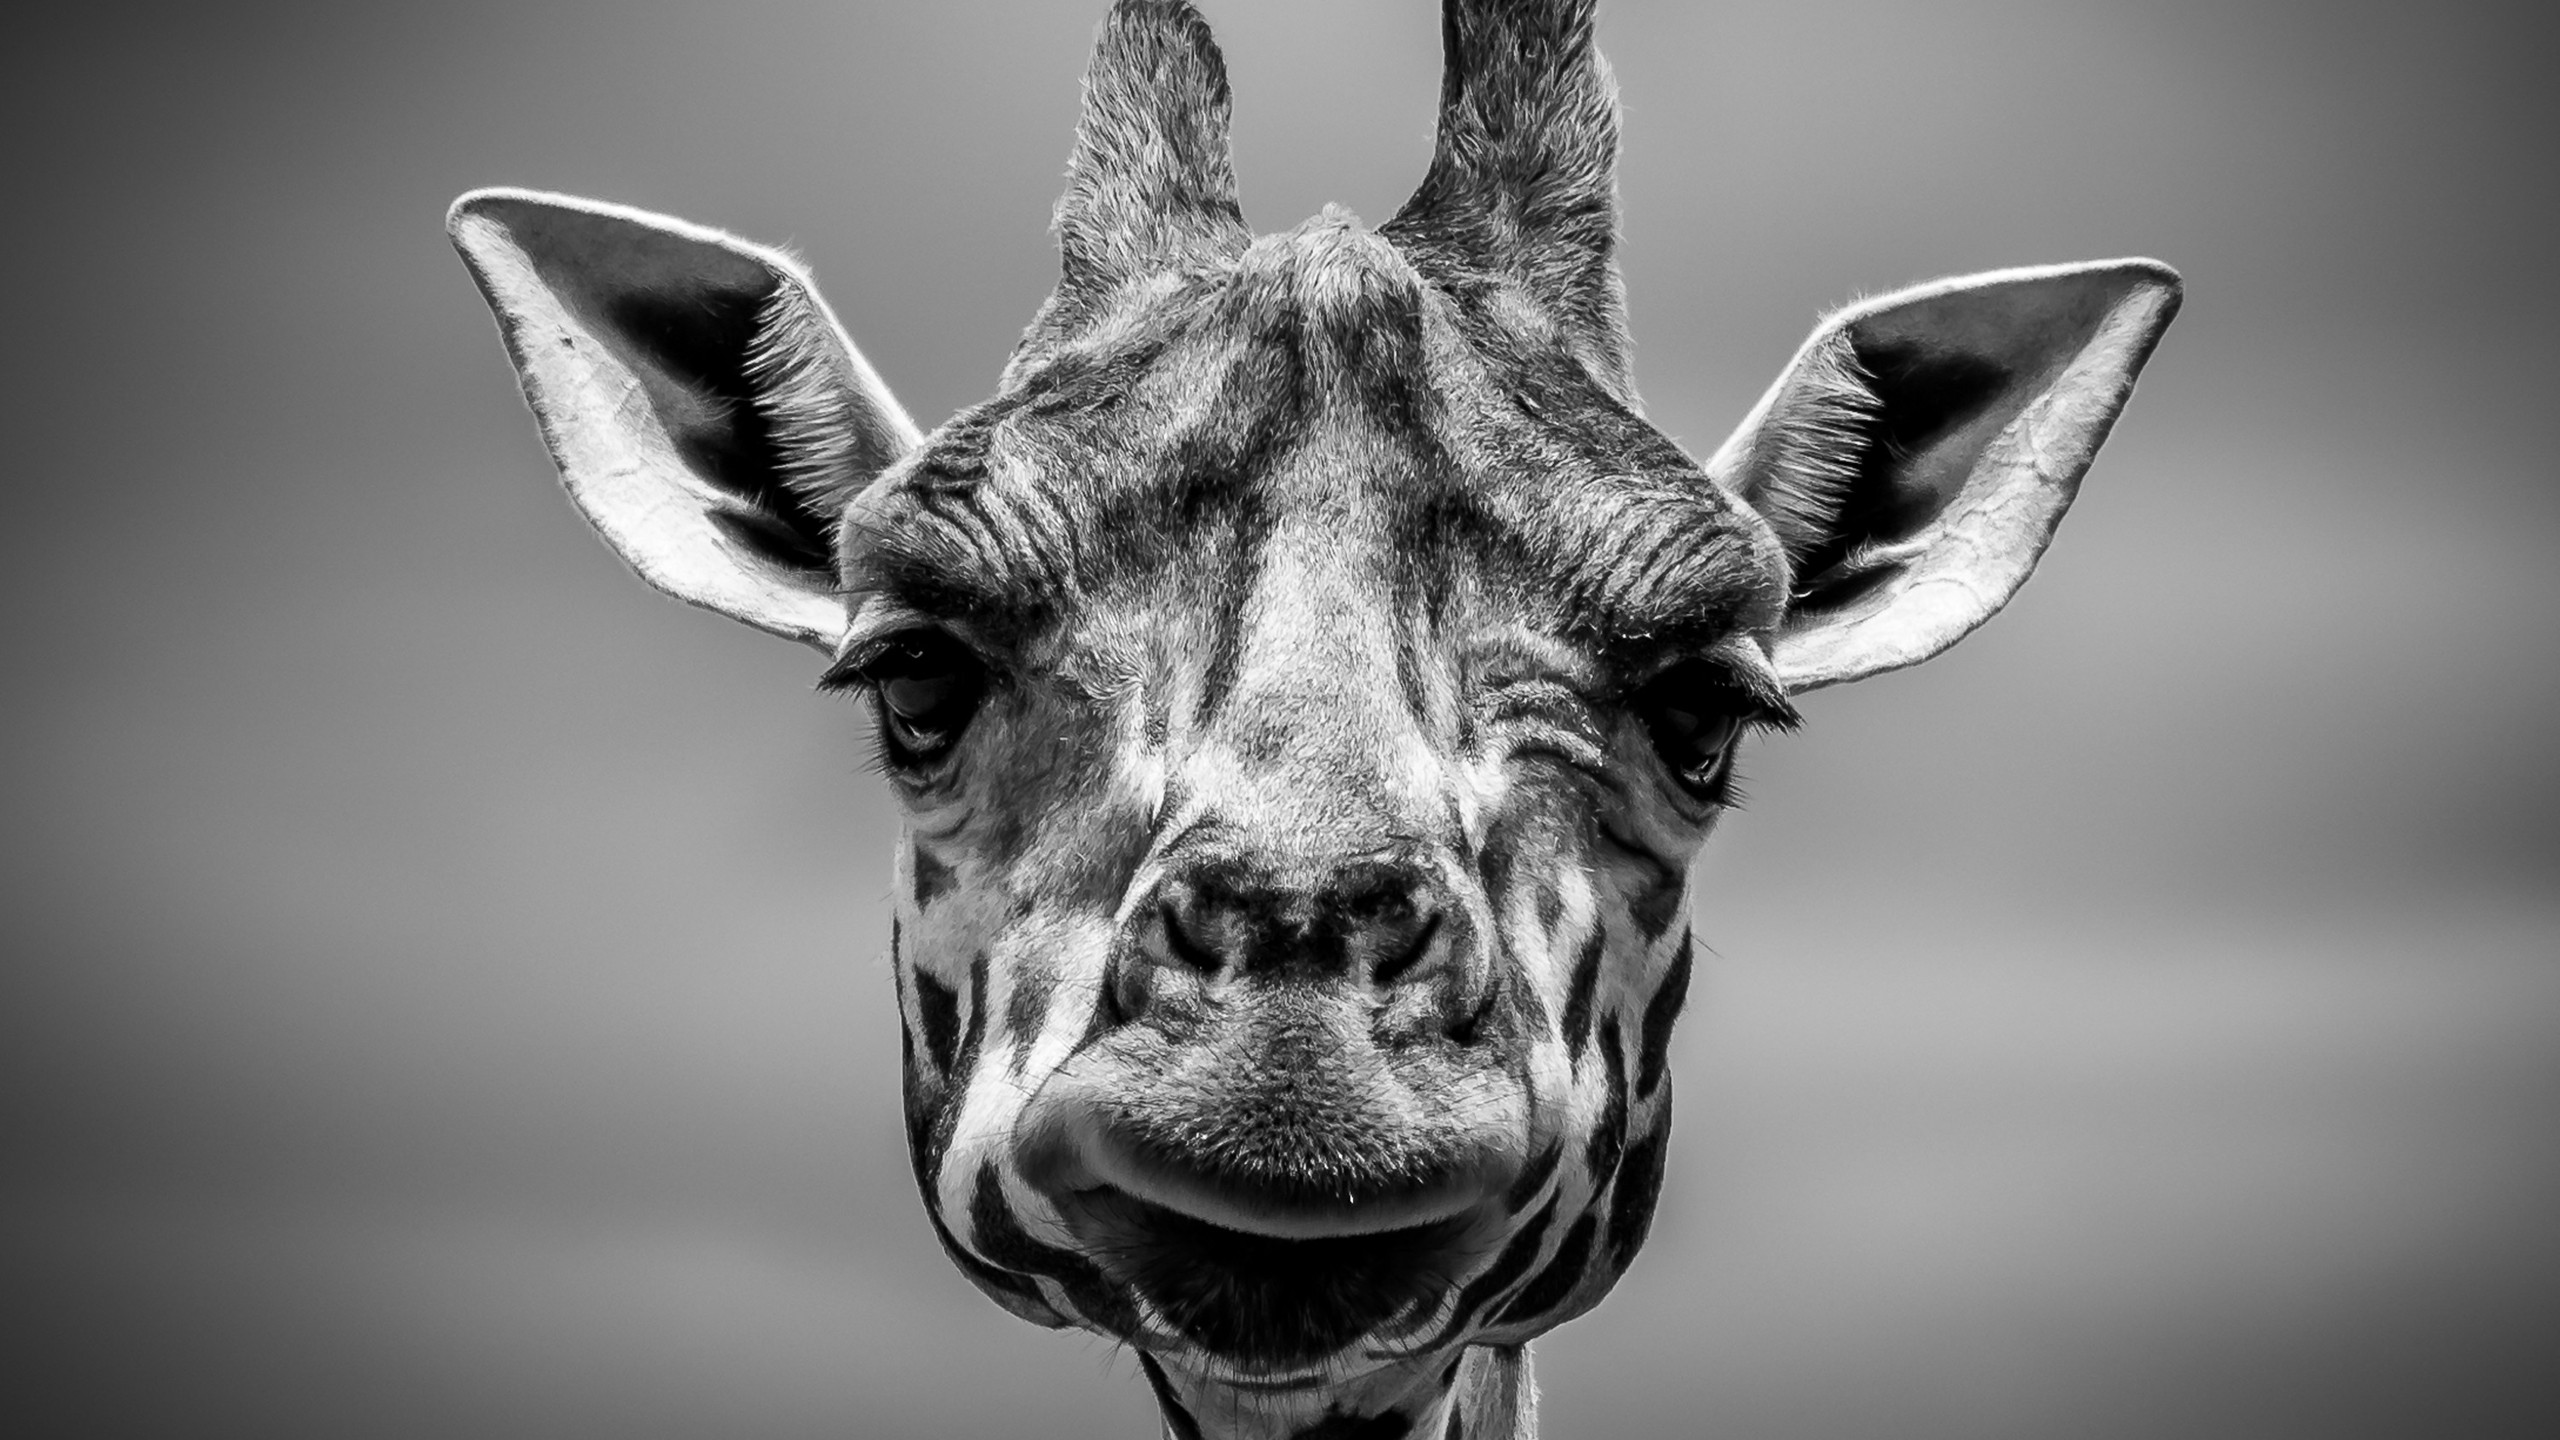 General 2560x1440 monochrome giraffes animals wildlife frontal view